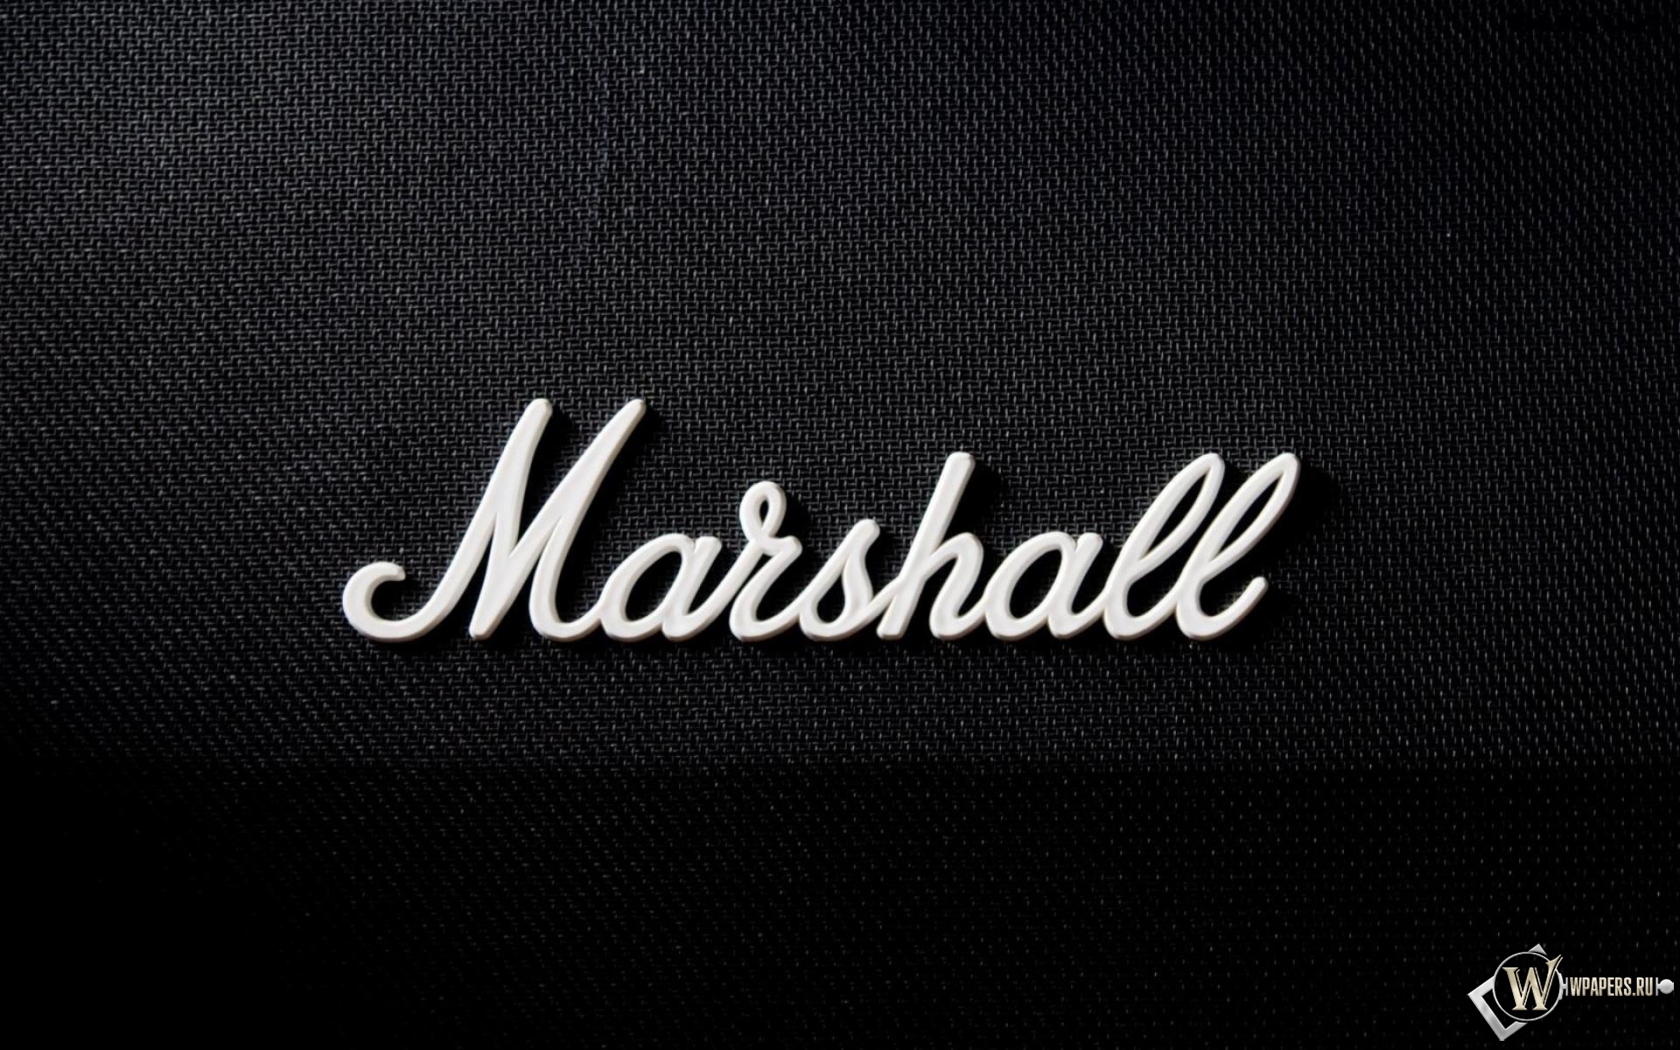 Marshall 1680x1050